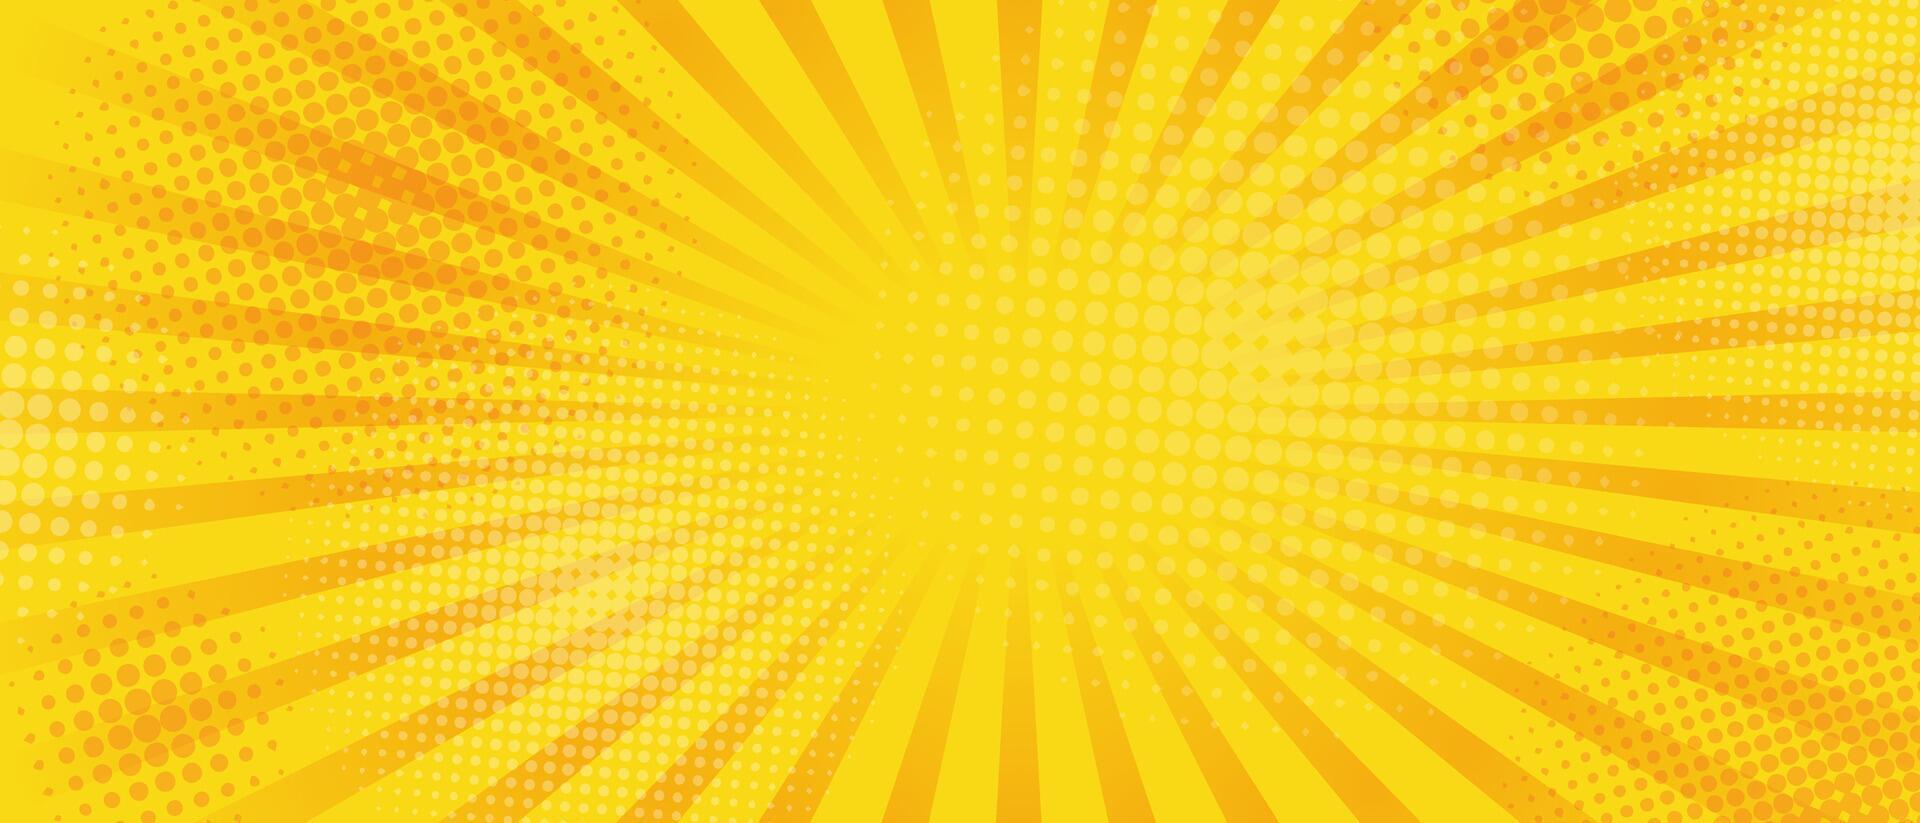 meio-tom pop arte estilo starburst padronizar desenho animado fundo amarelo luz efeito. vintage tom. vetor ilustração. Uau gradiente Projeto bandeira